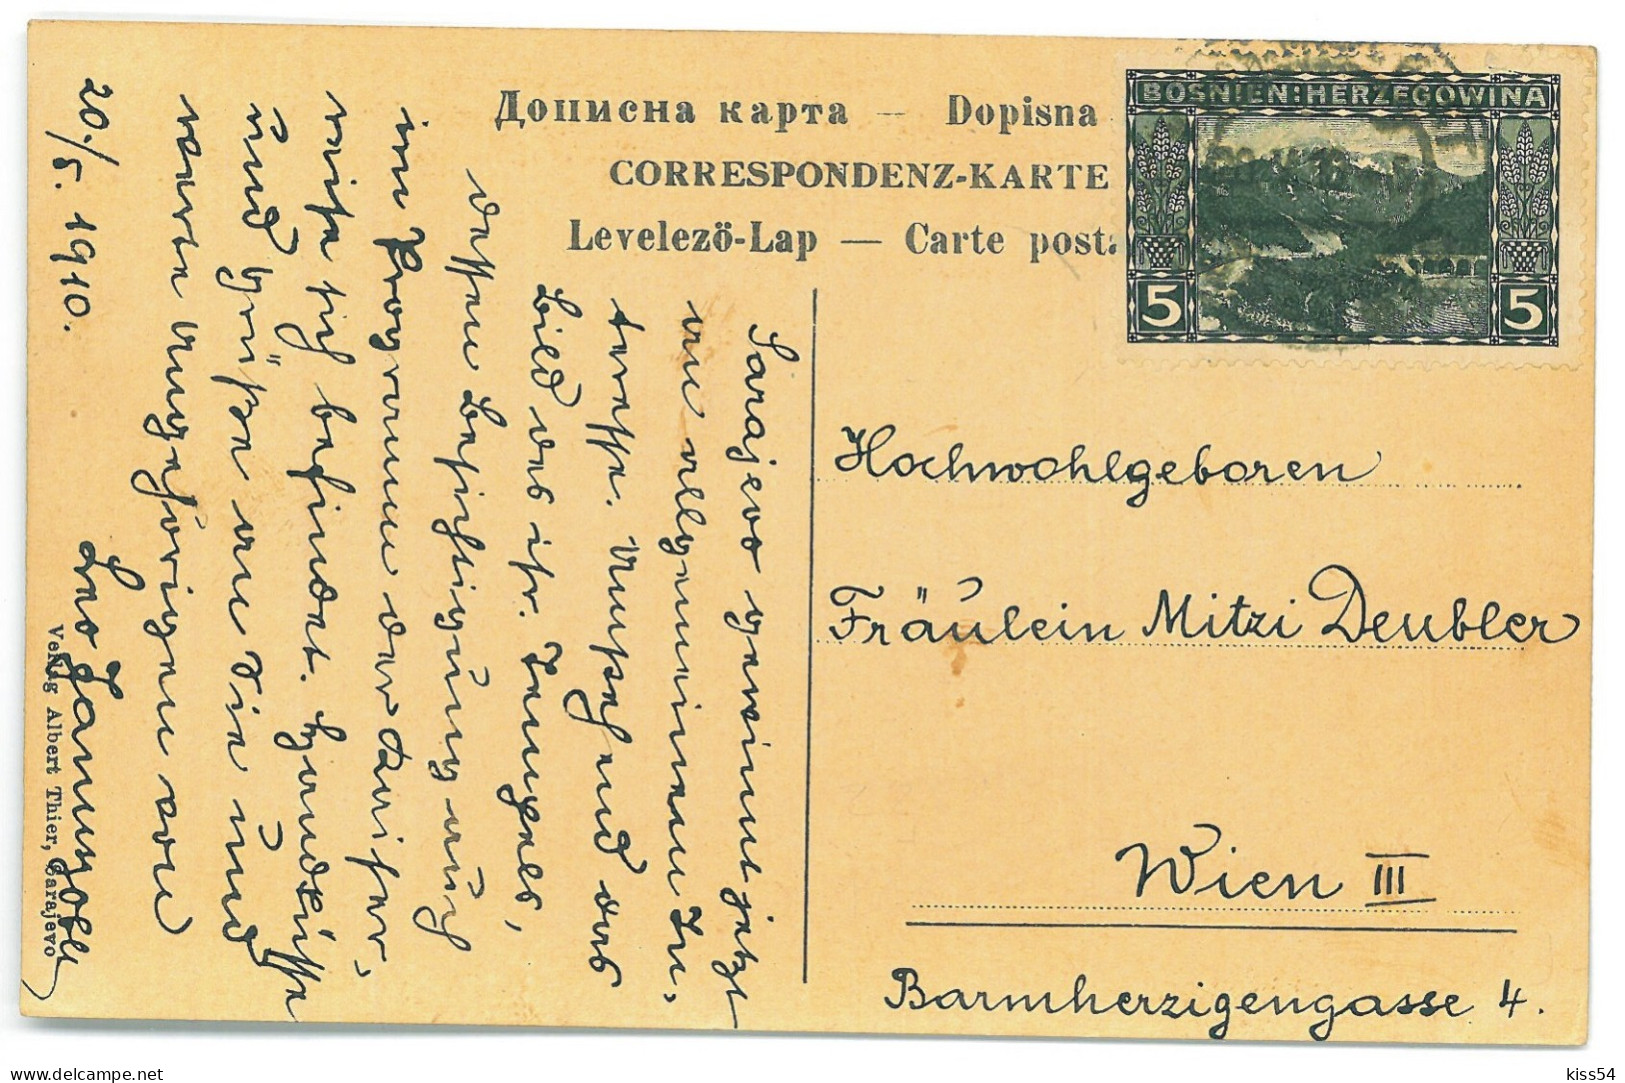 BO 4 - 20439 SARAJEVO, SYNAGOGUE, Bosnia - Old Postcard - Used - 1910 - Bosnie-Herzegovine